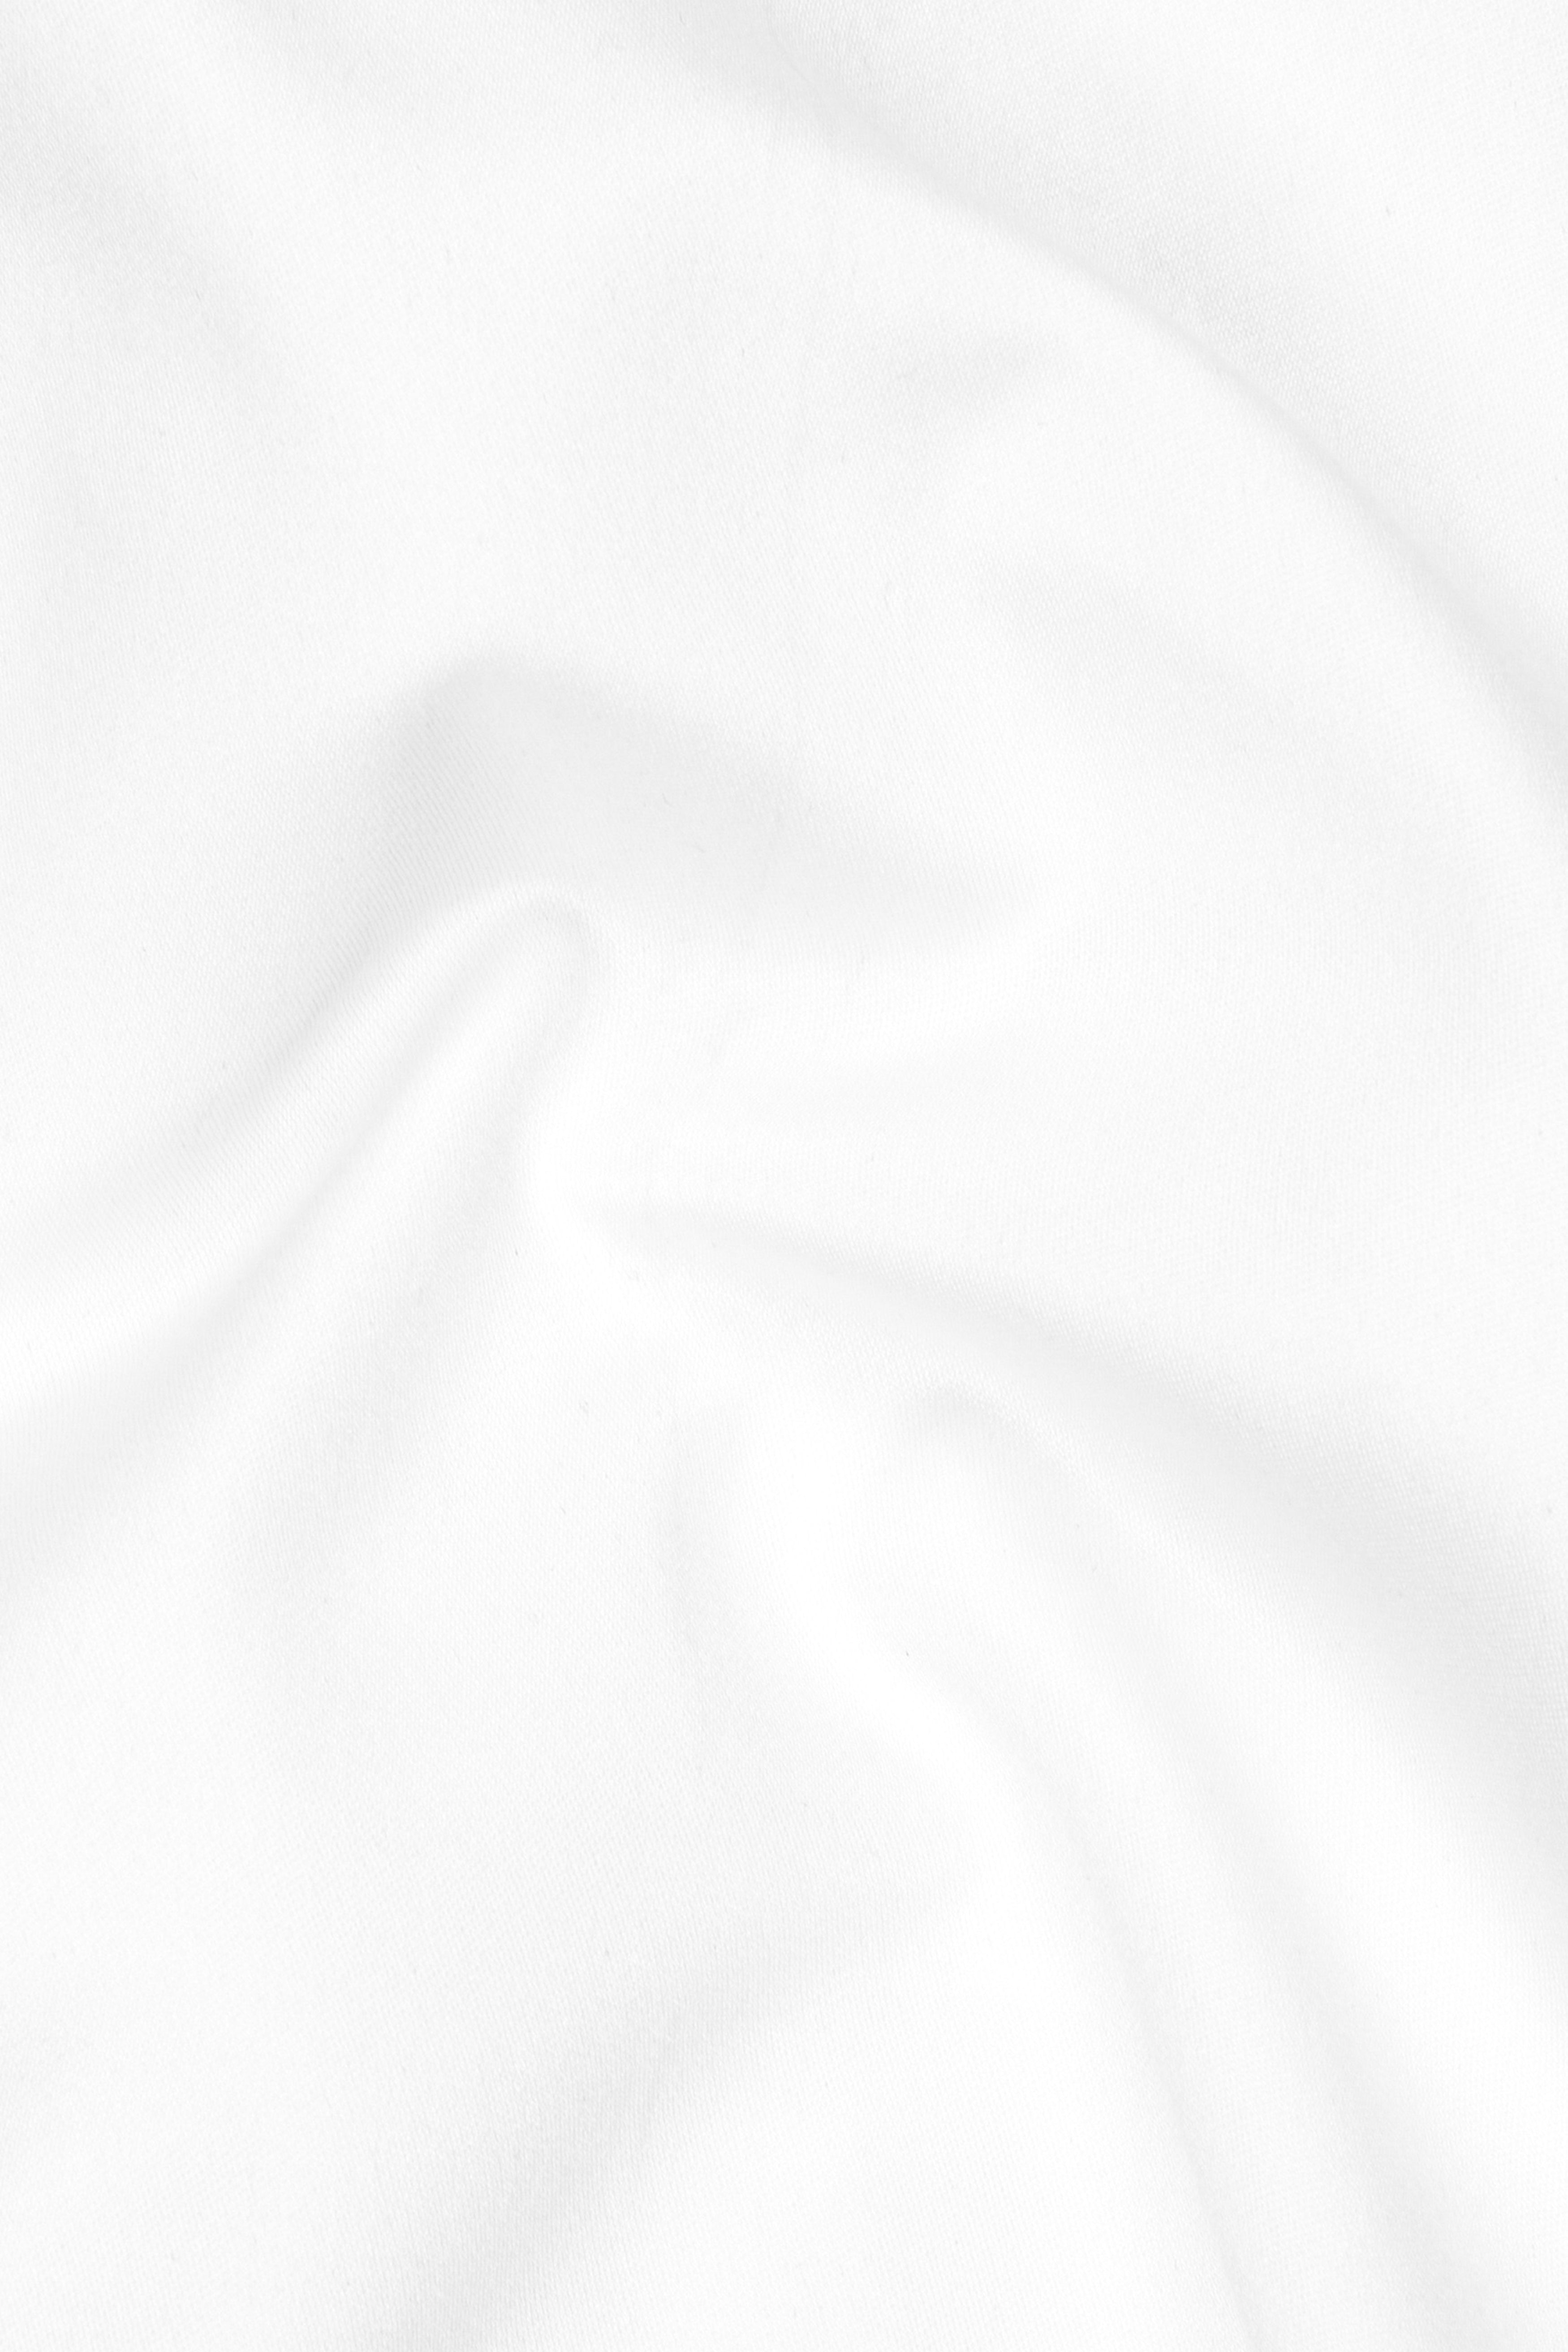 BRIGHT WHITE Subtle Sheen BANDHGALA/MANDARIN BLAZER